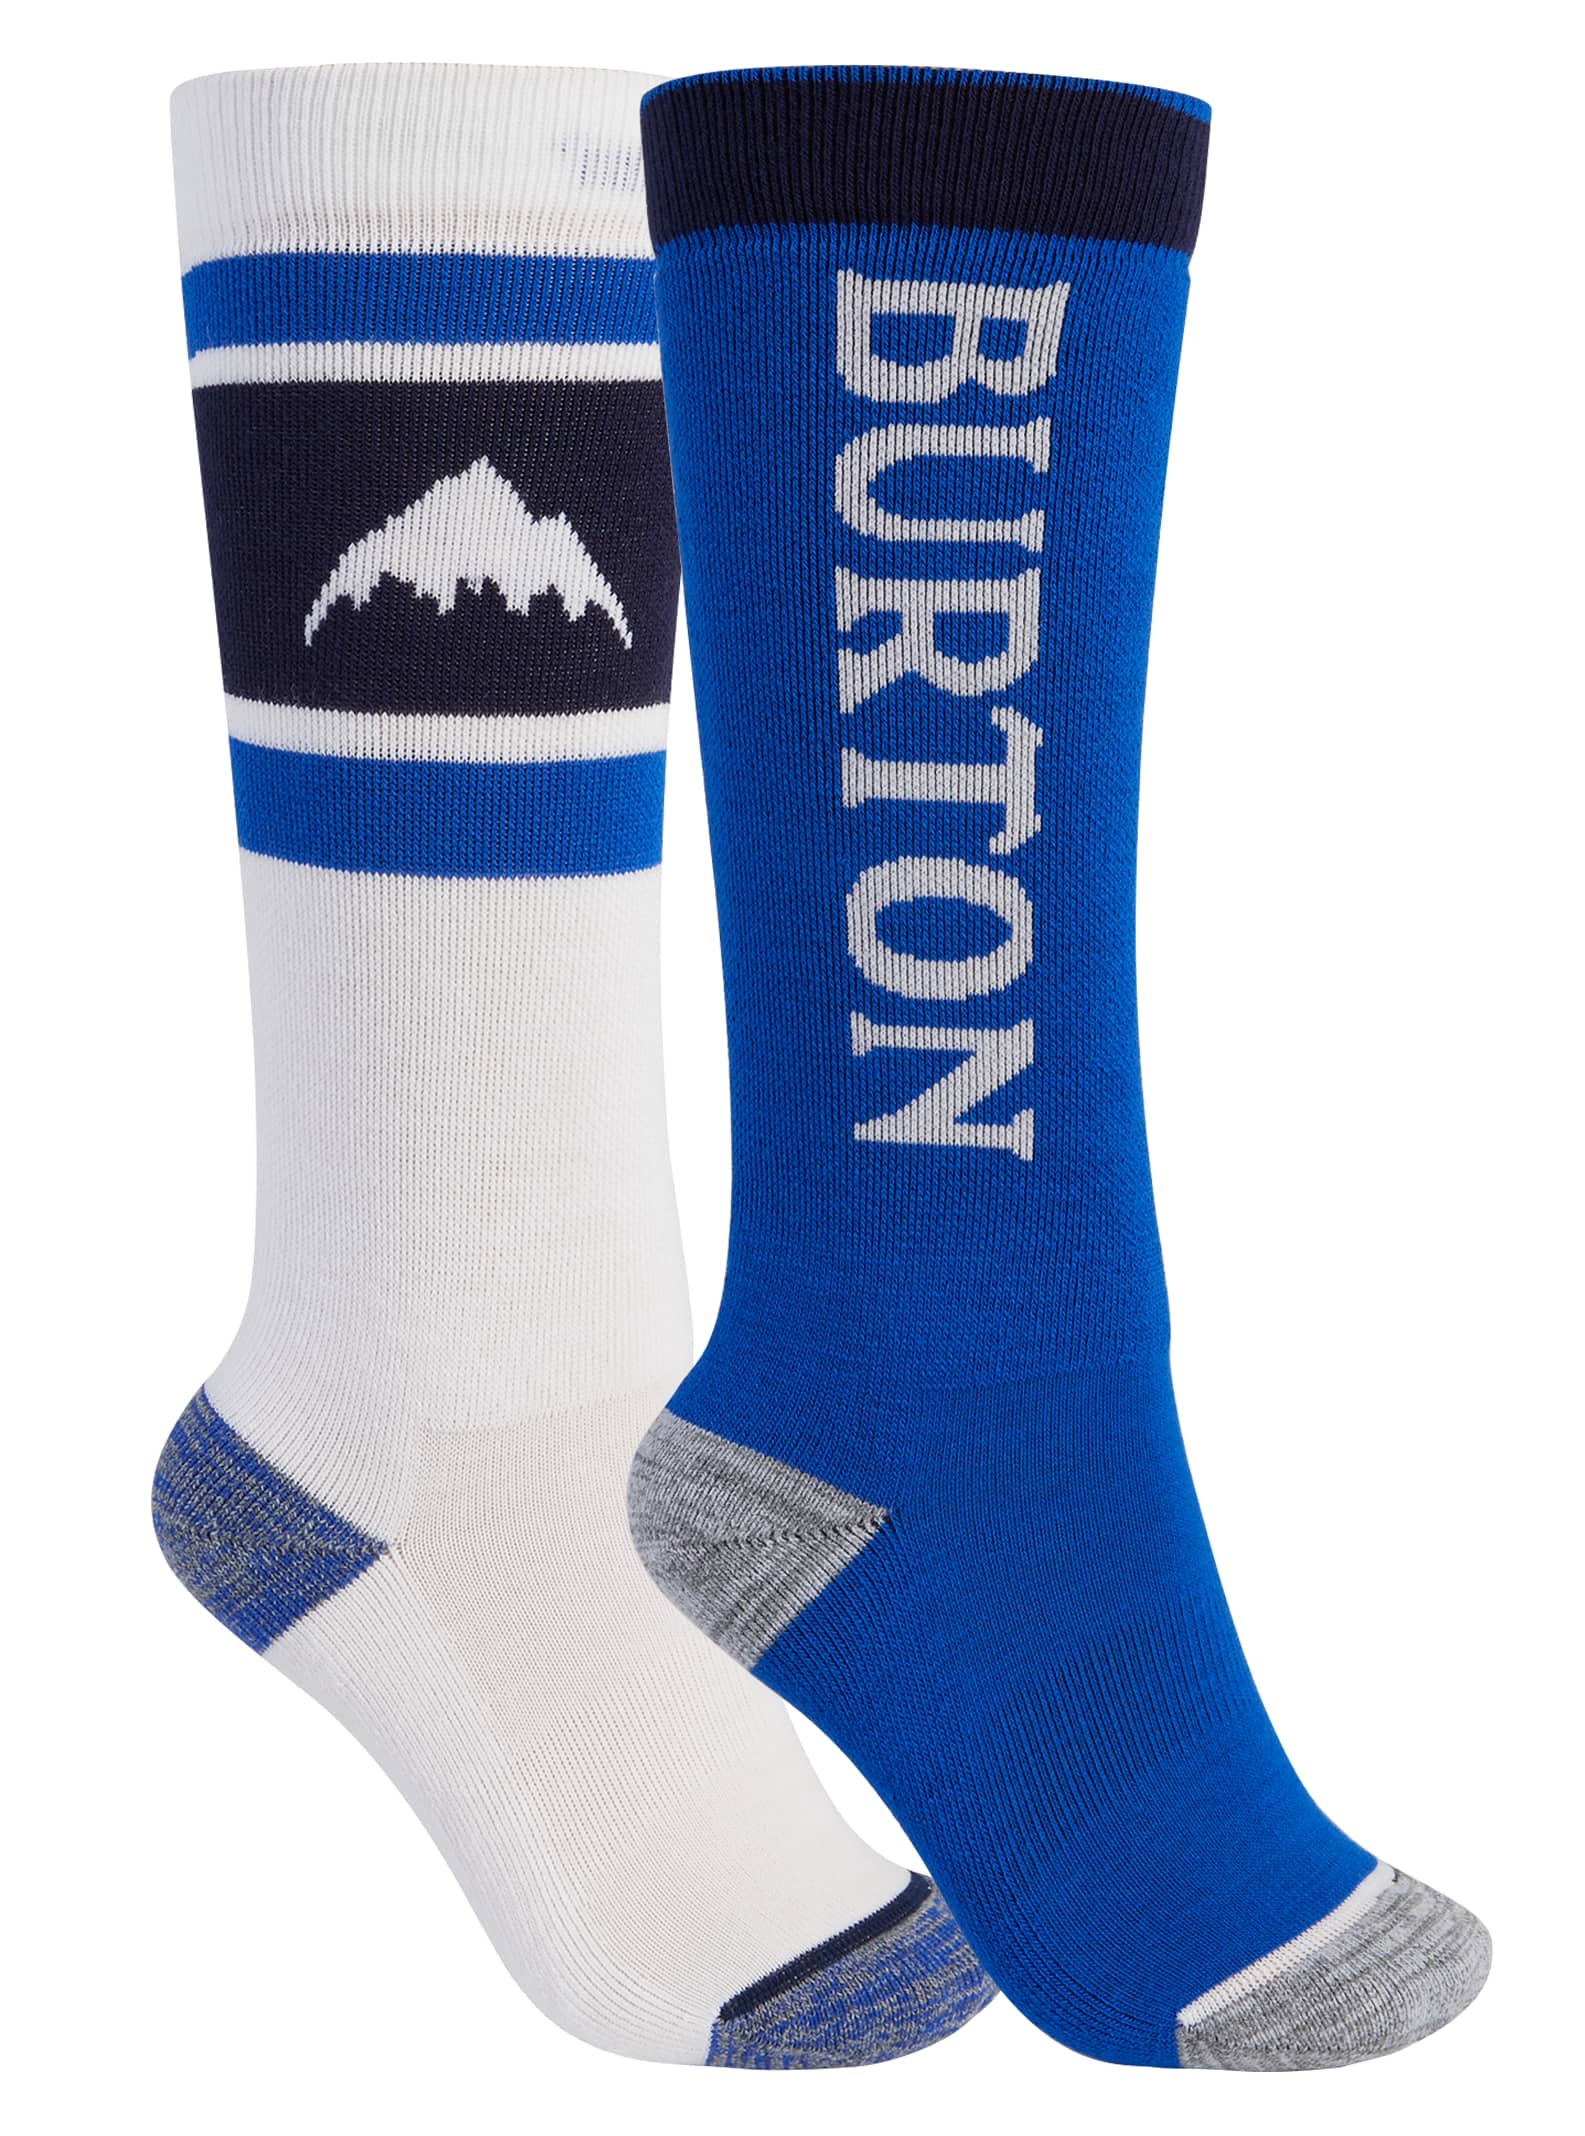 Kids' Socks | Burton Snowboards GB